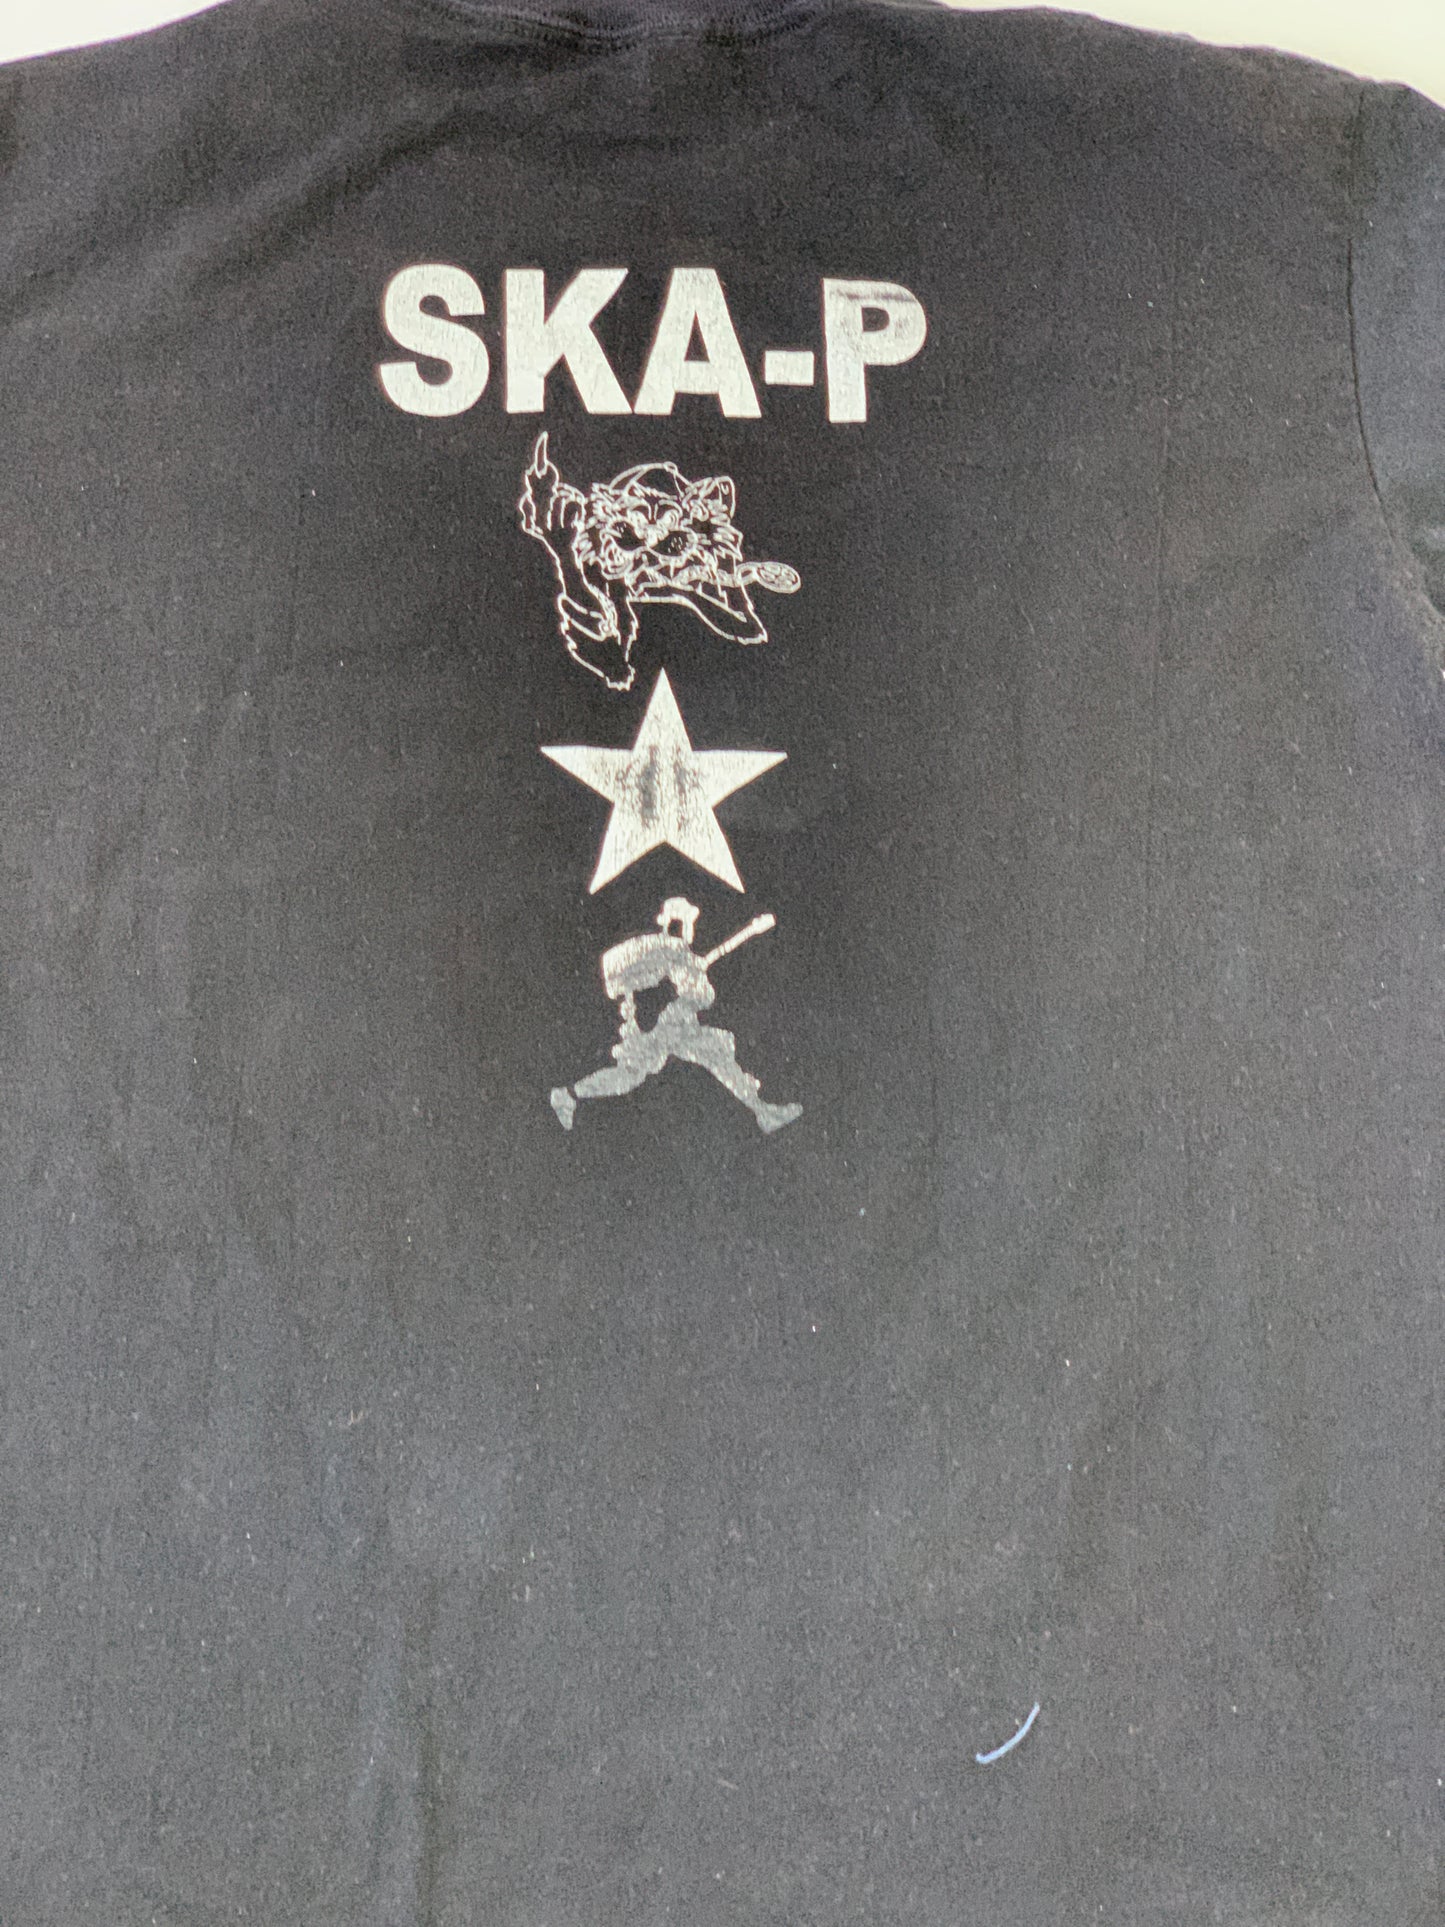 Ska-P 2008 Vintage T-Shirt - M